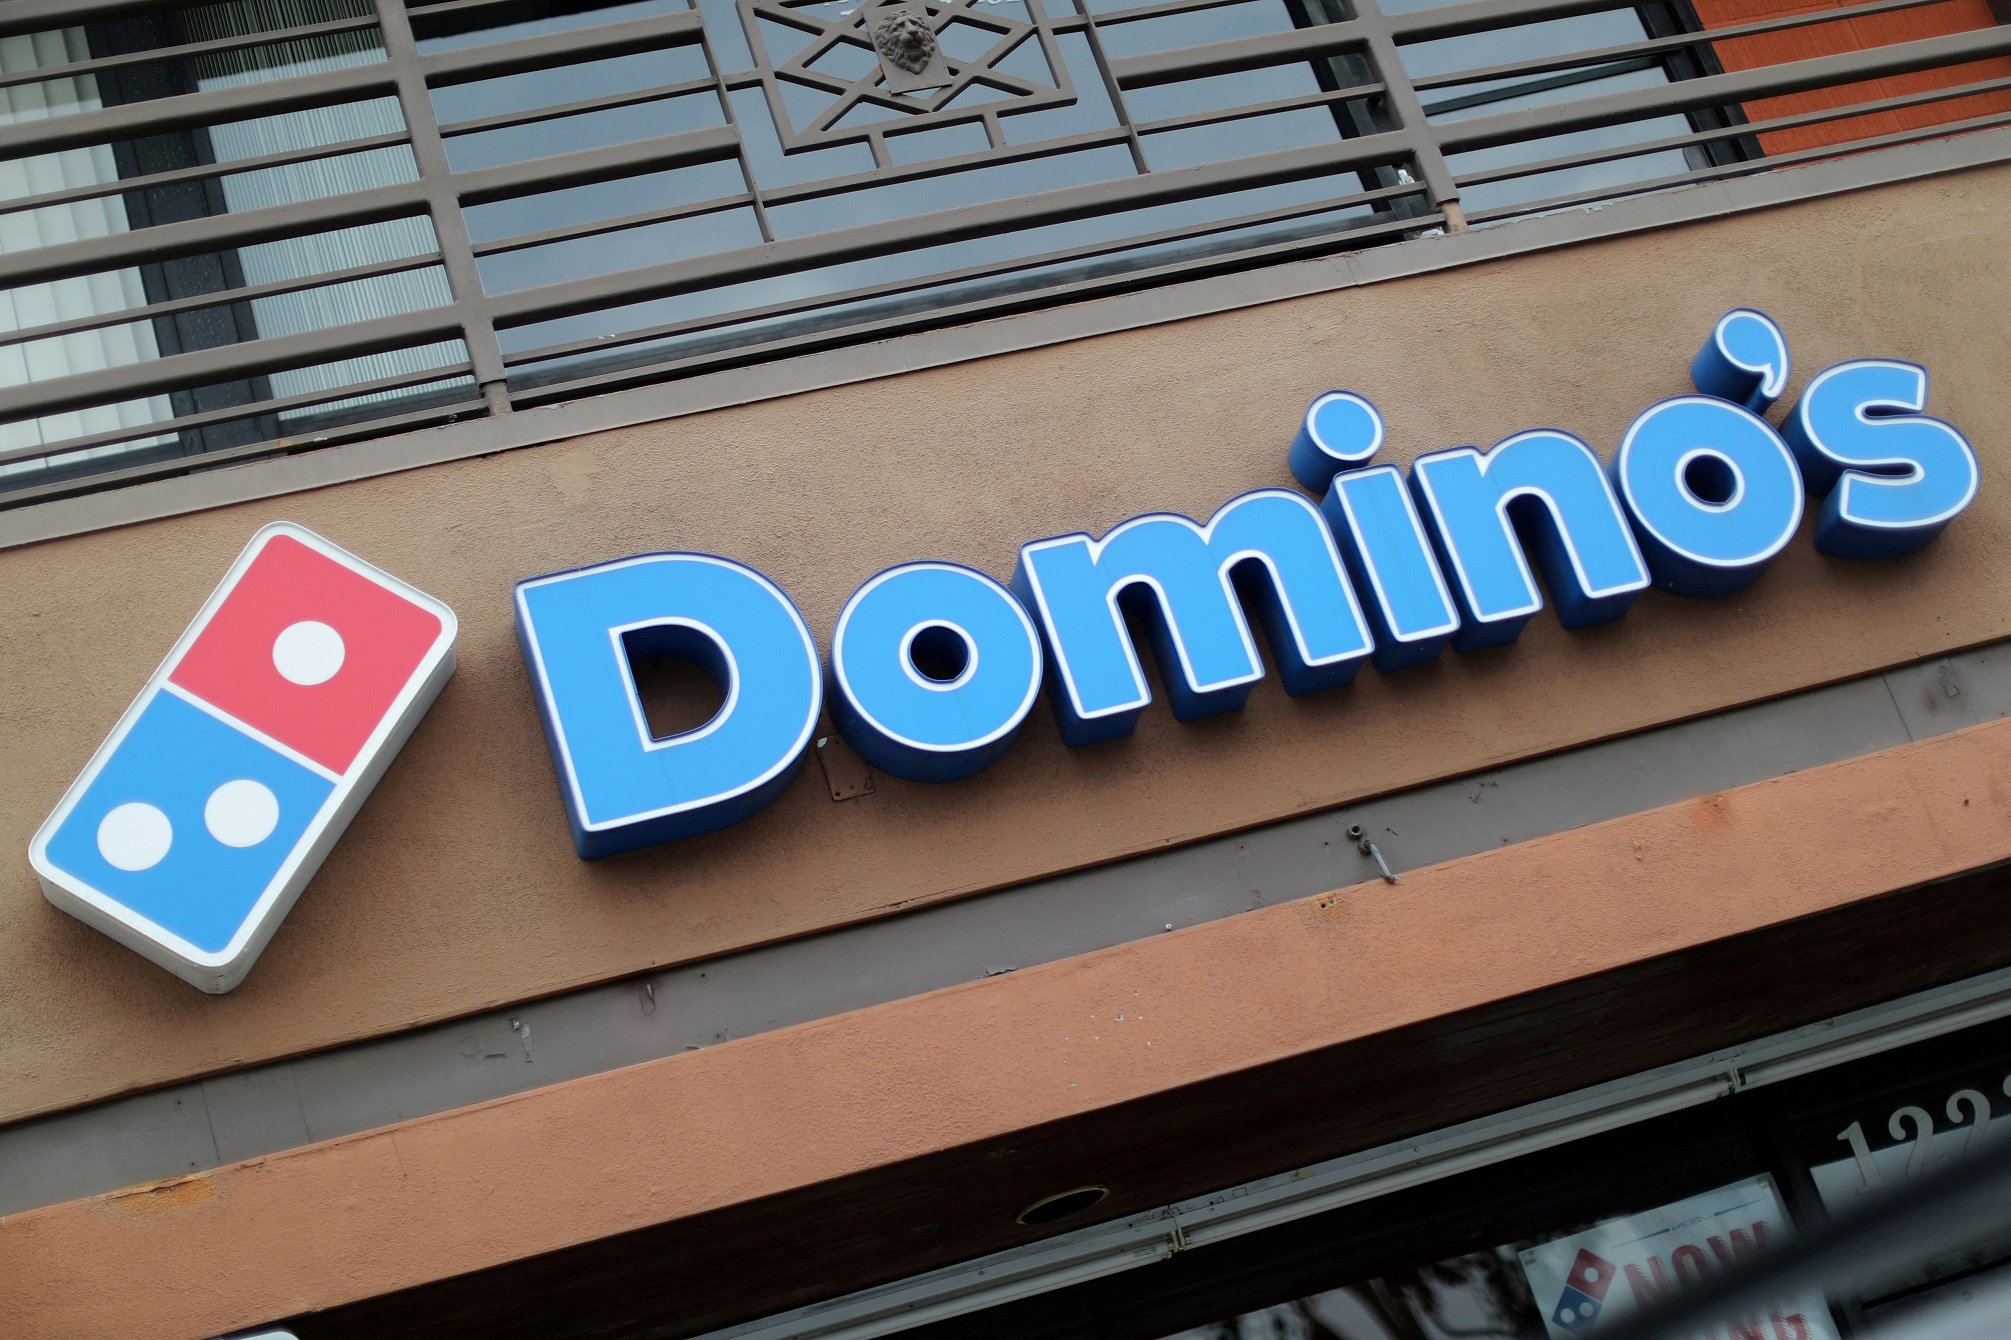 Arrivederci στη Domino’s Pizza λένε οι Ιταλοί –  Σε πτώχευση το franchise